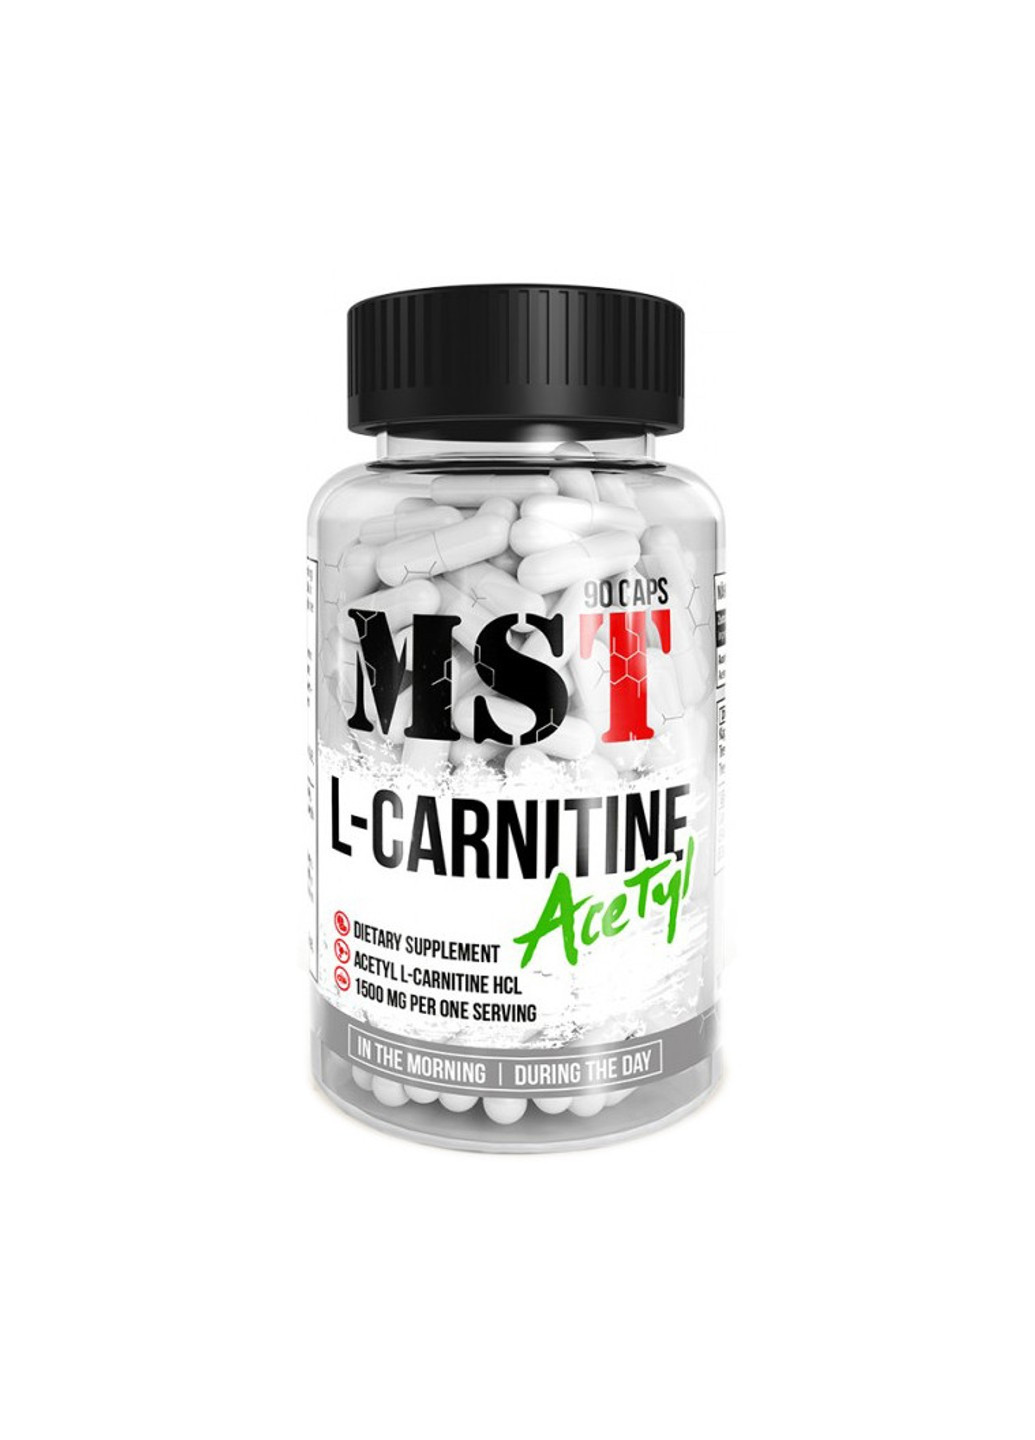 Л-карнитин L-Carnitine Acetyl (90 caps) мст MST (255362959)